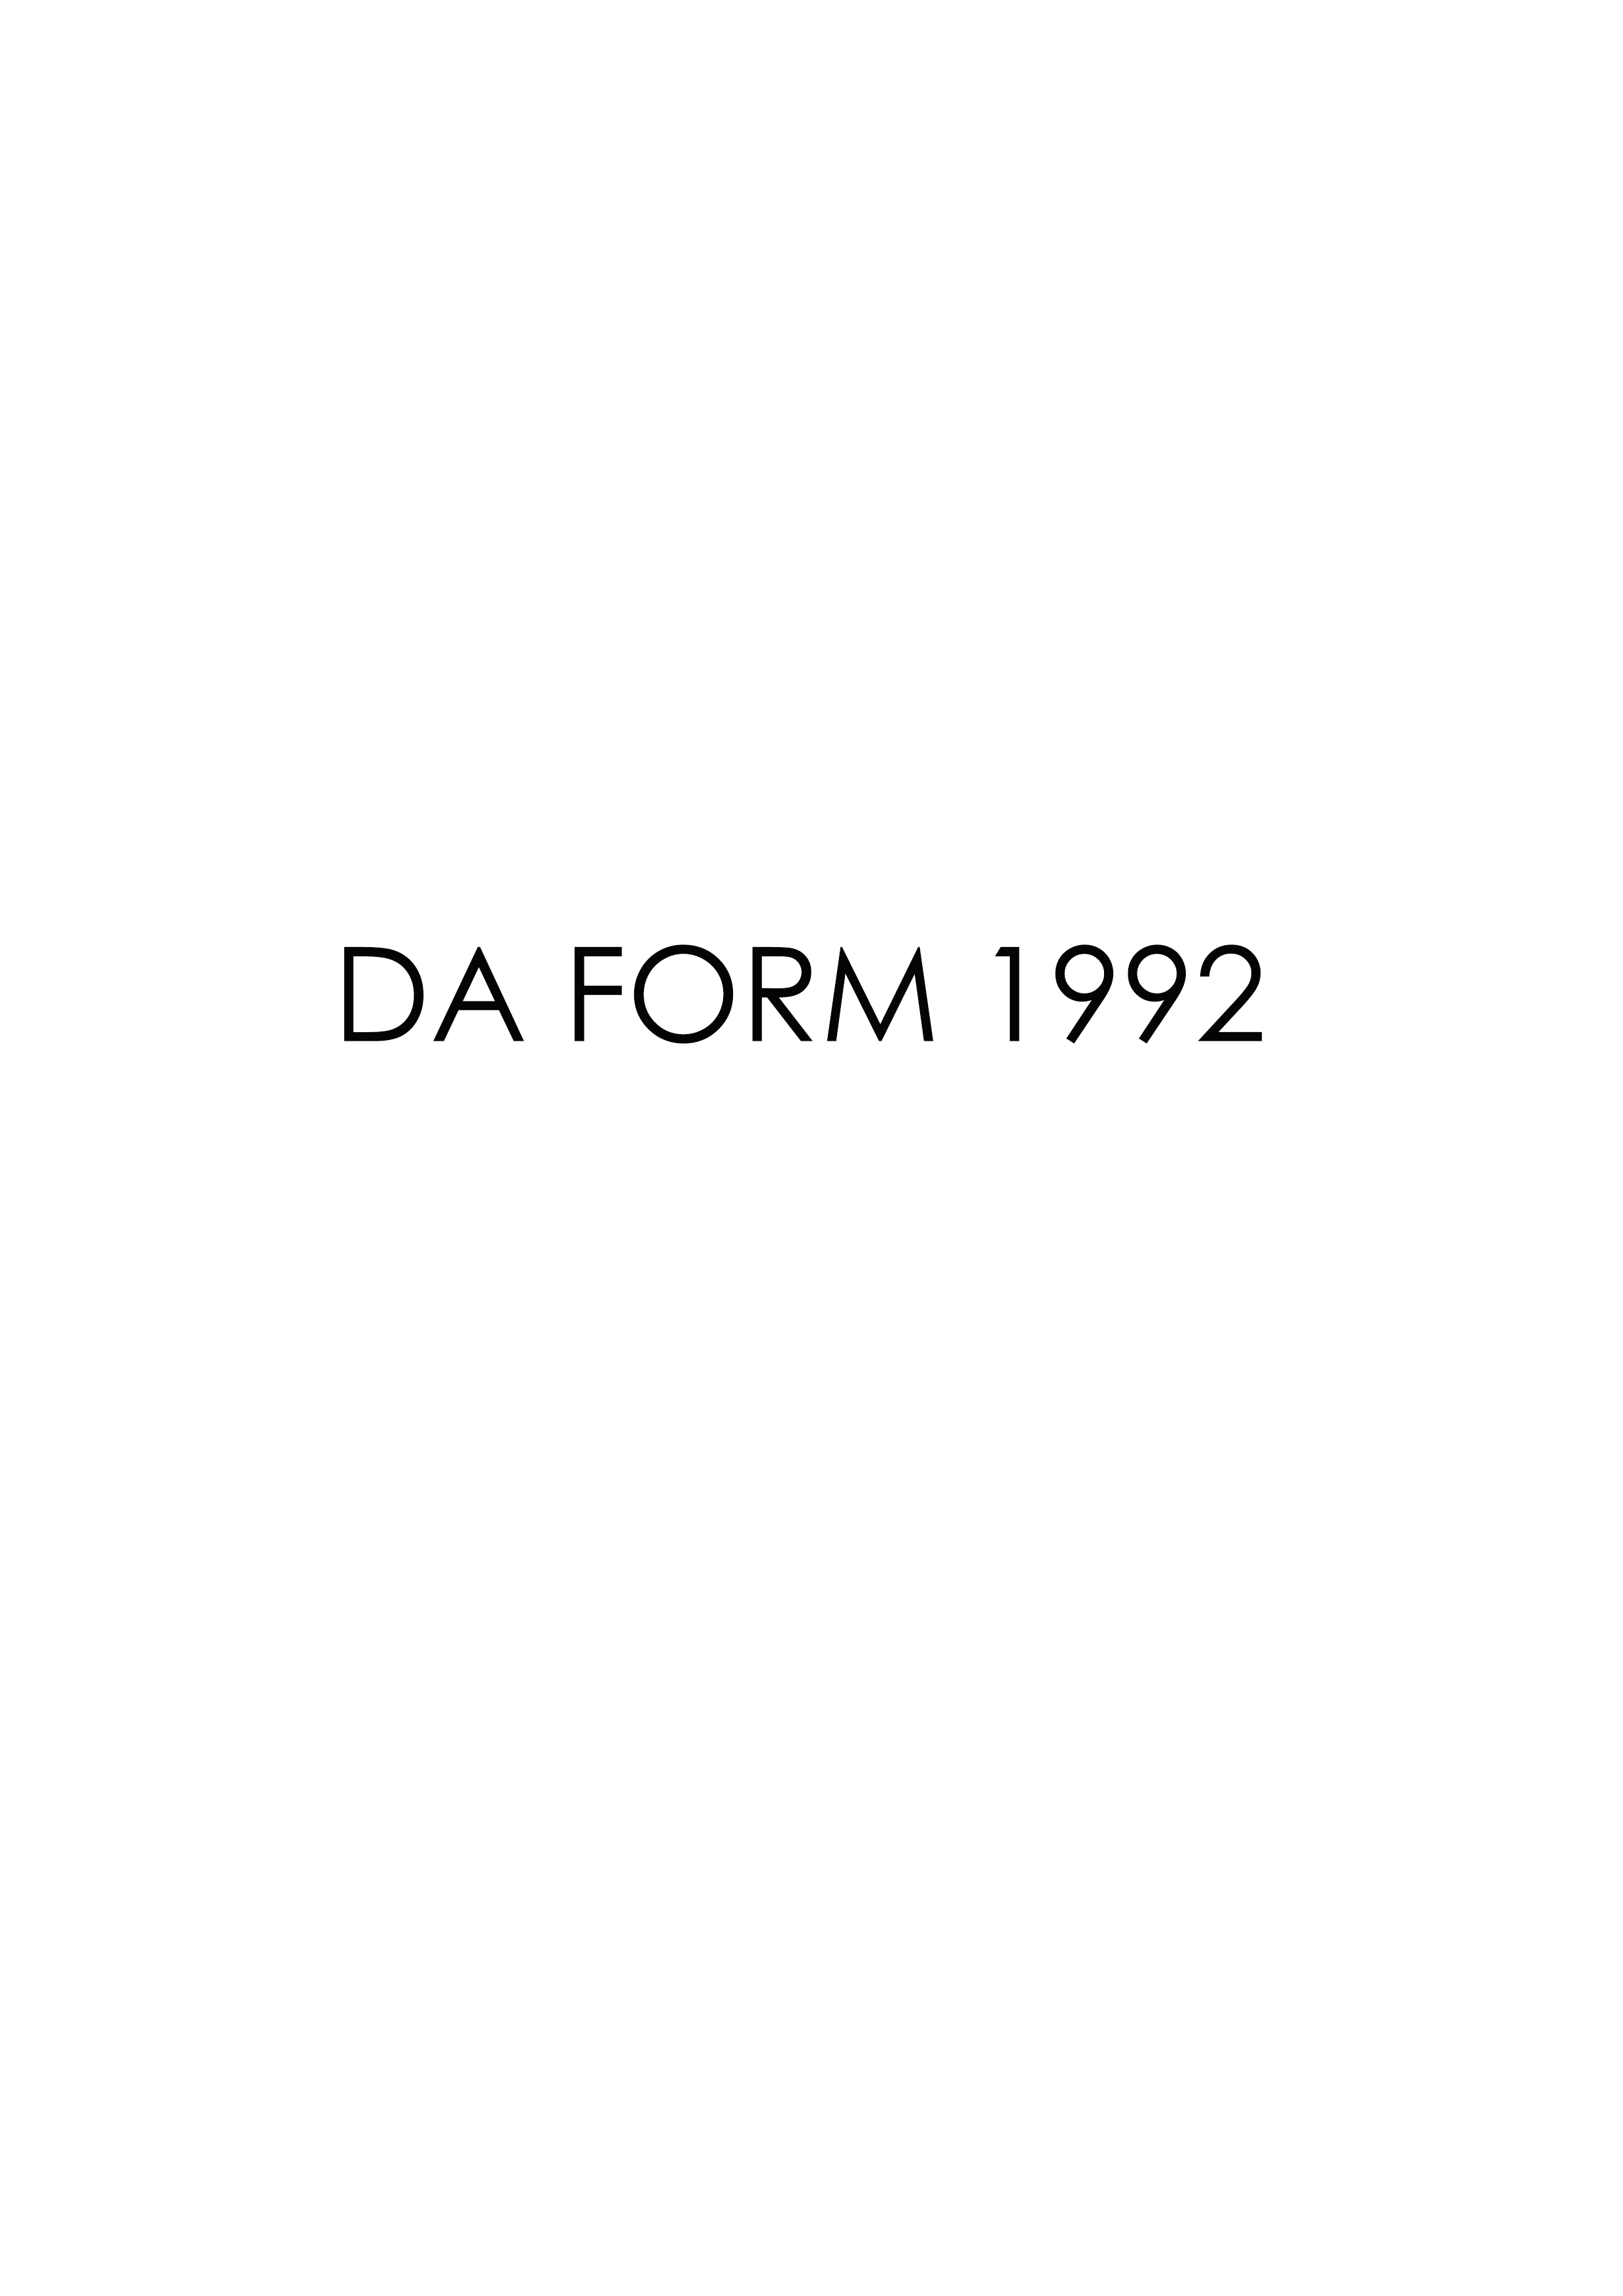 Download da 1992 Form Free